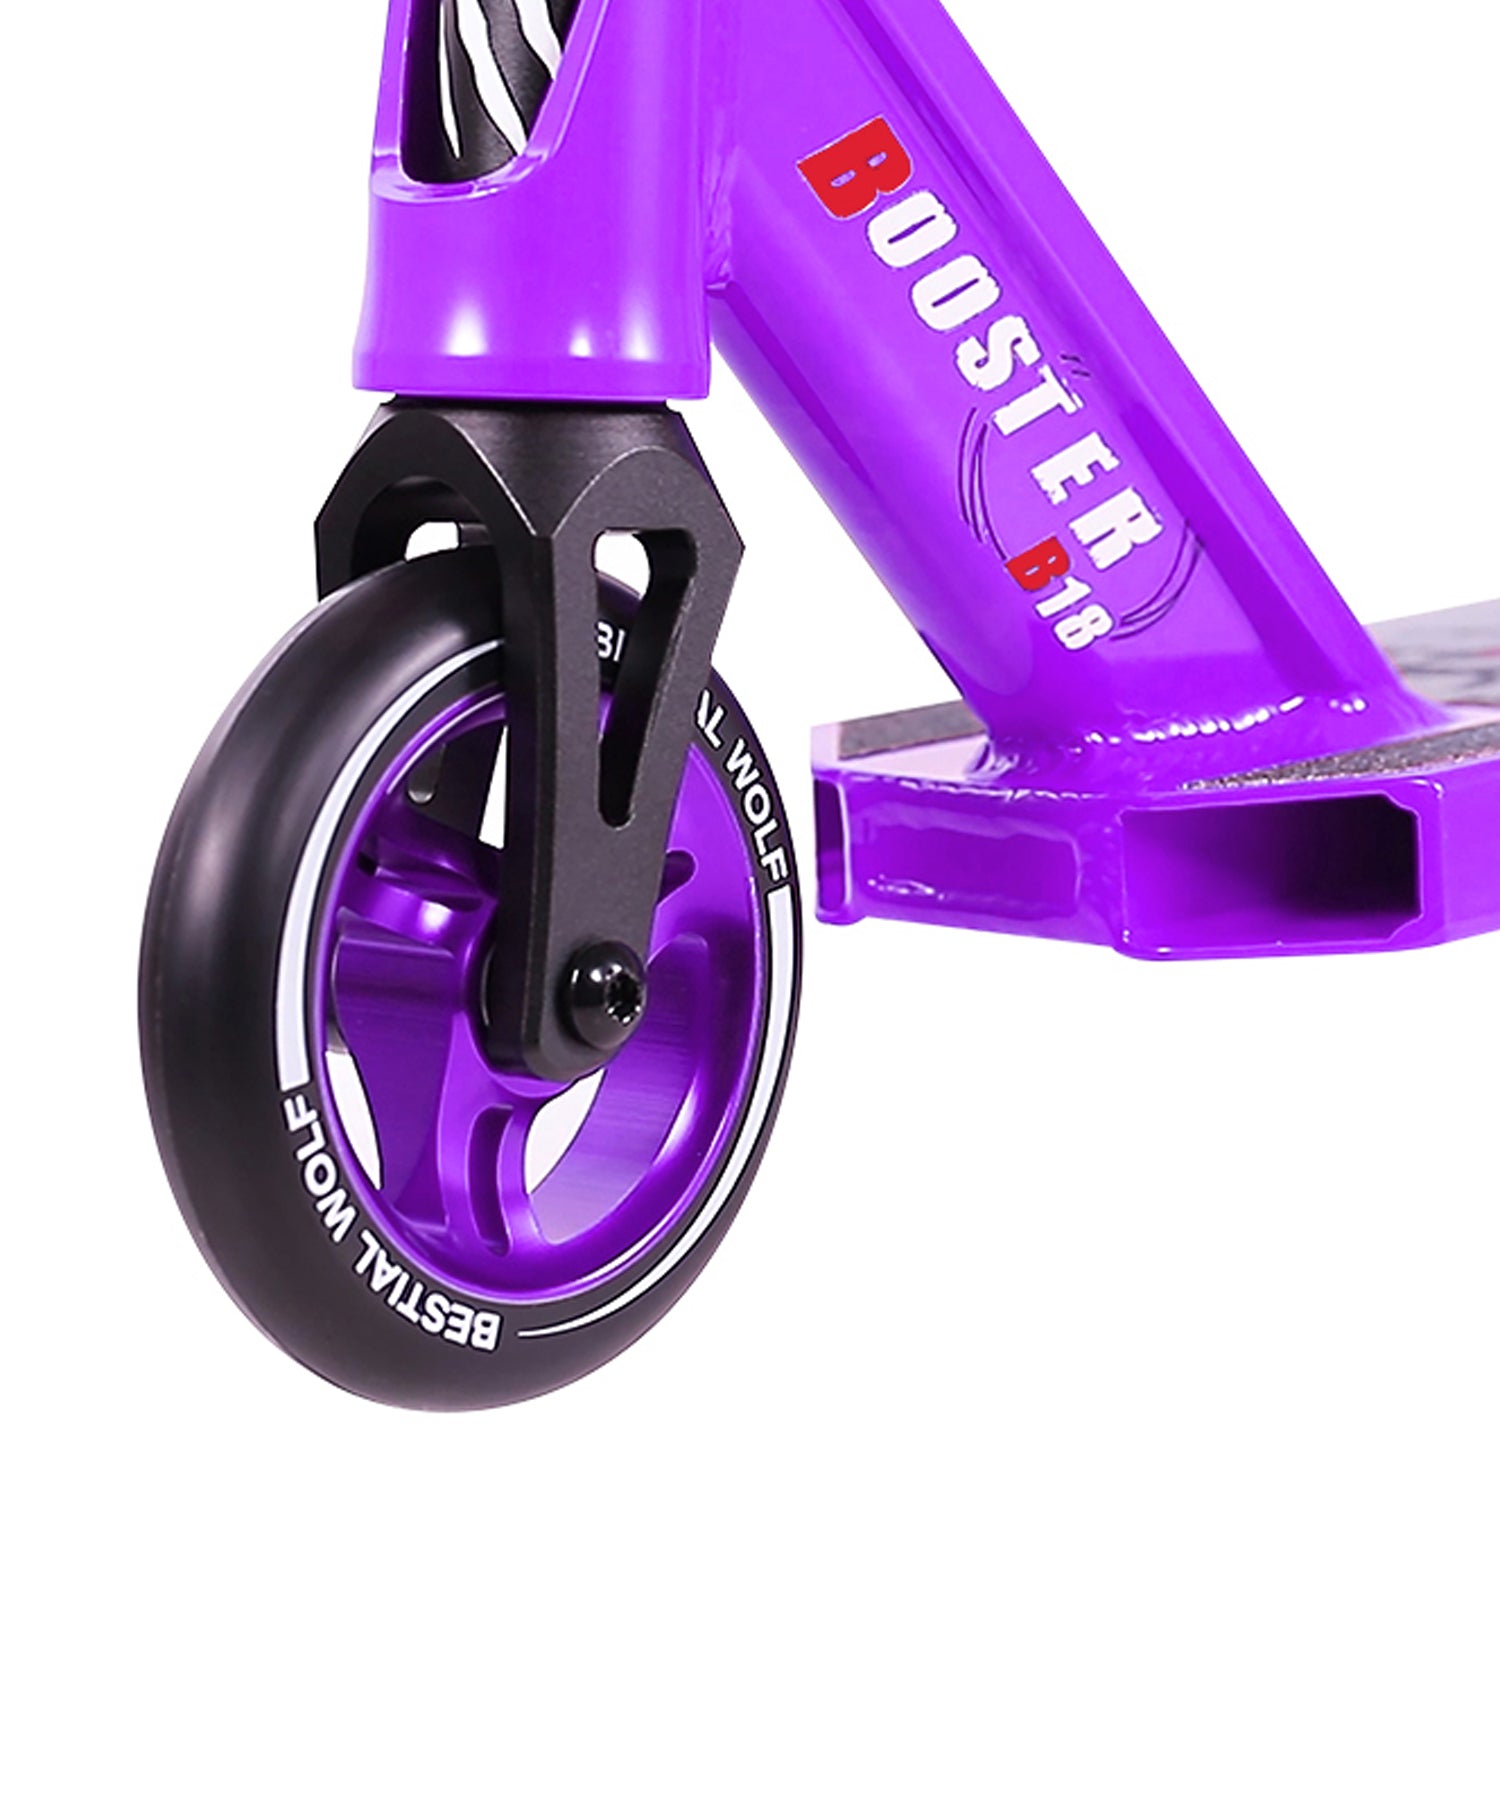 bestial-wolf-scooter-completo-bosster-b18-color-violeta-altamente-resistente-fabricado-en-chromoly-ruedas-de-aluminio.